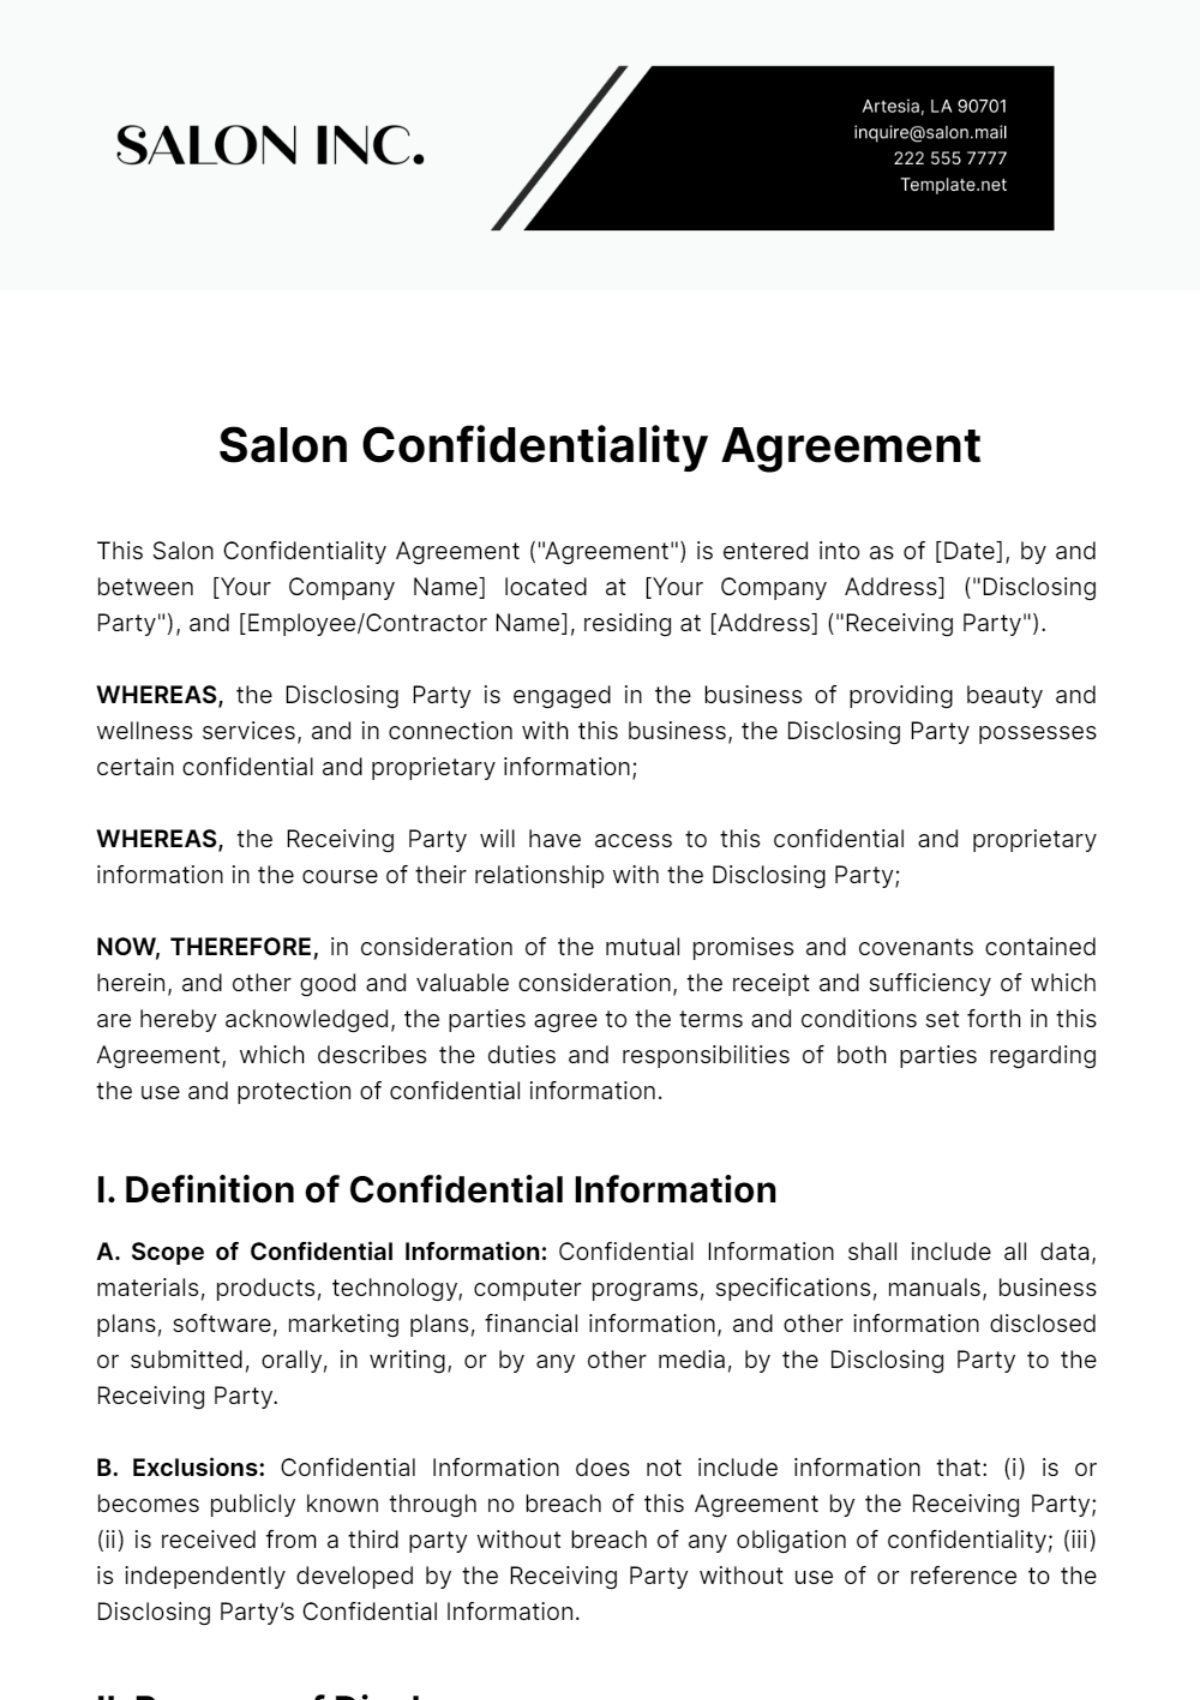 Salon Confidentiality Agreement Template